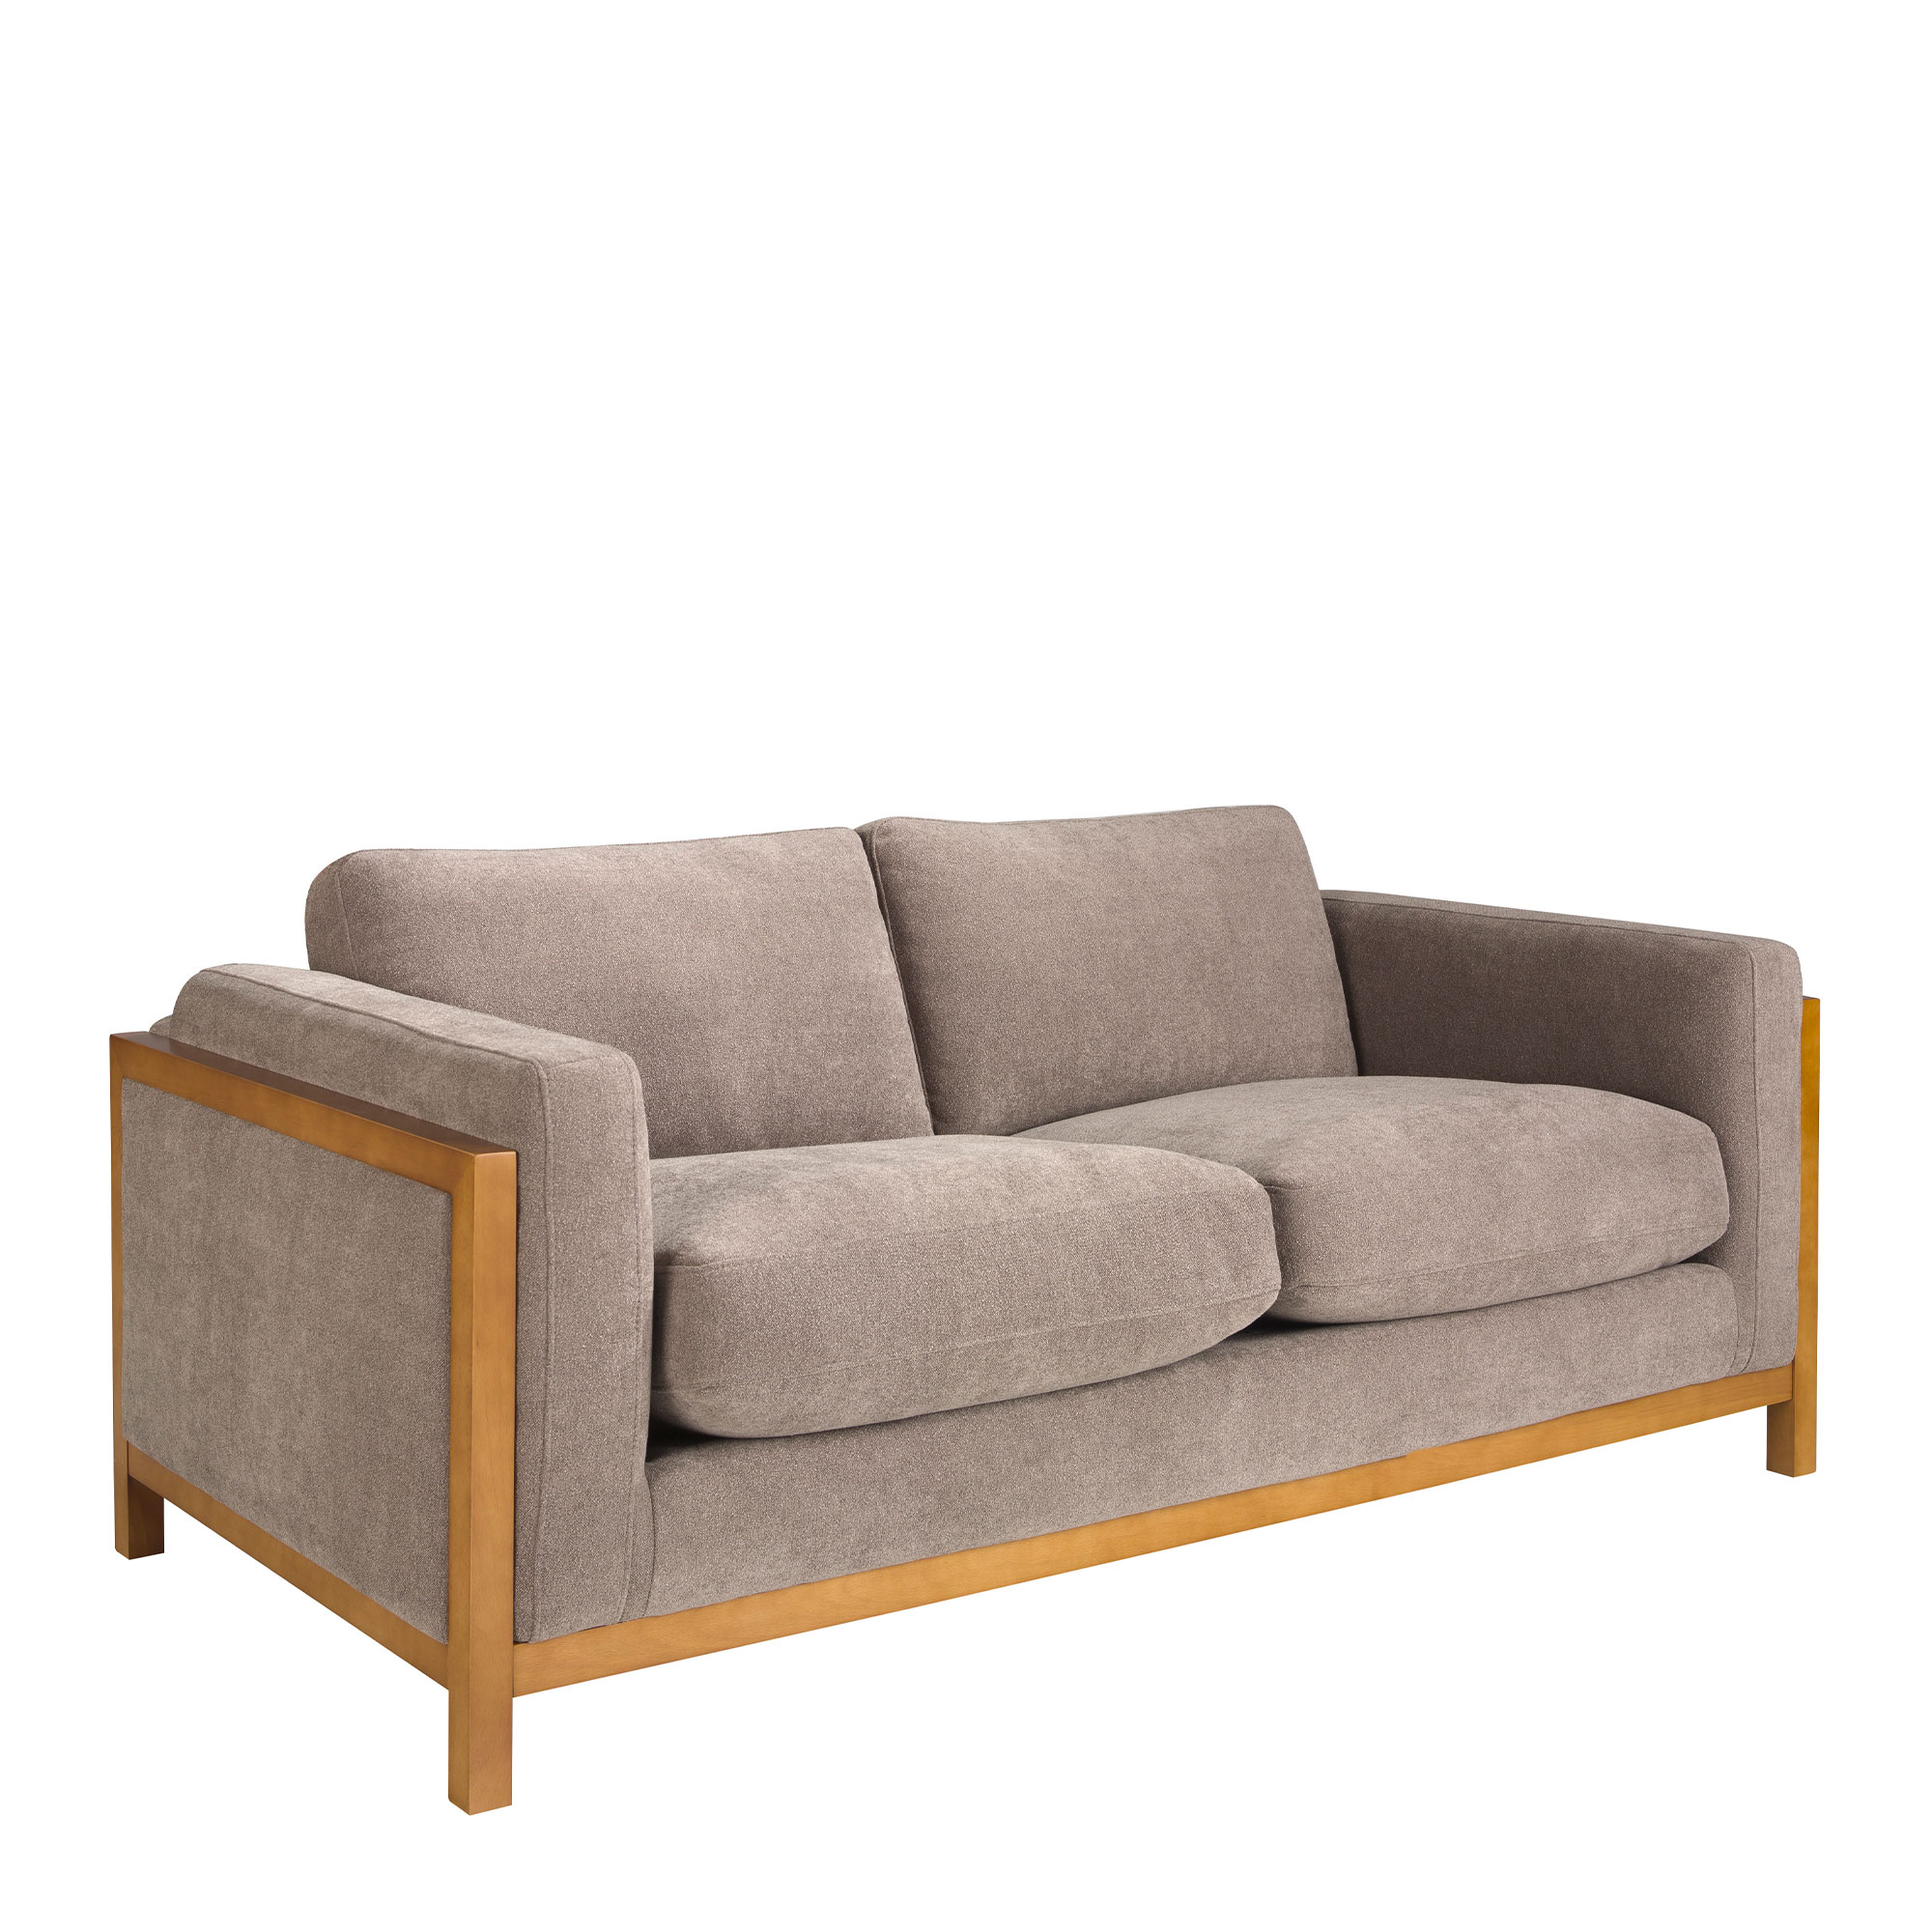 2 seater sofa in brown fabric